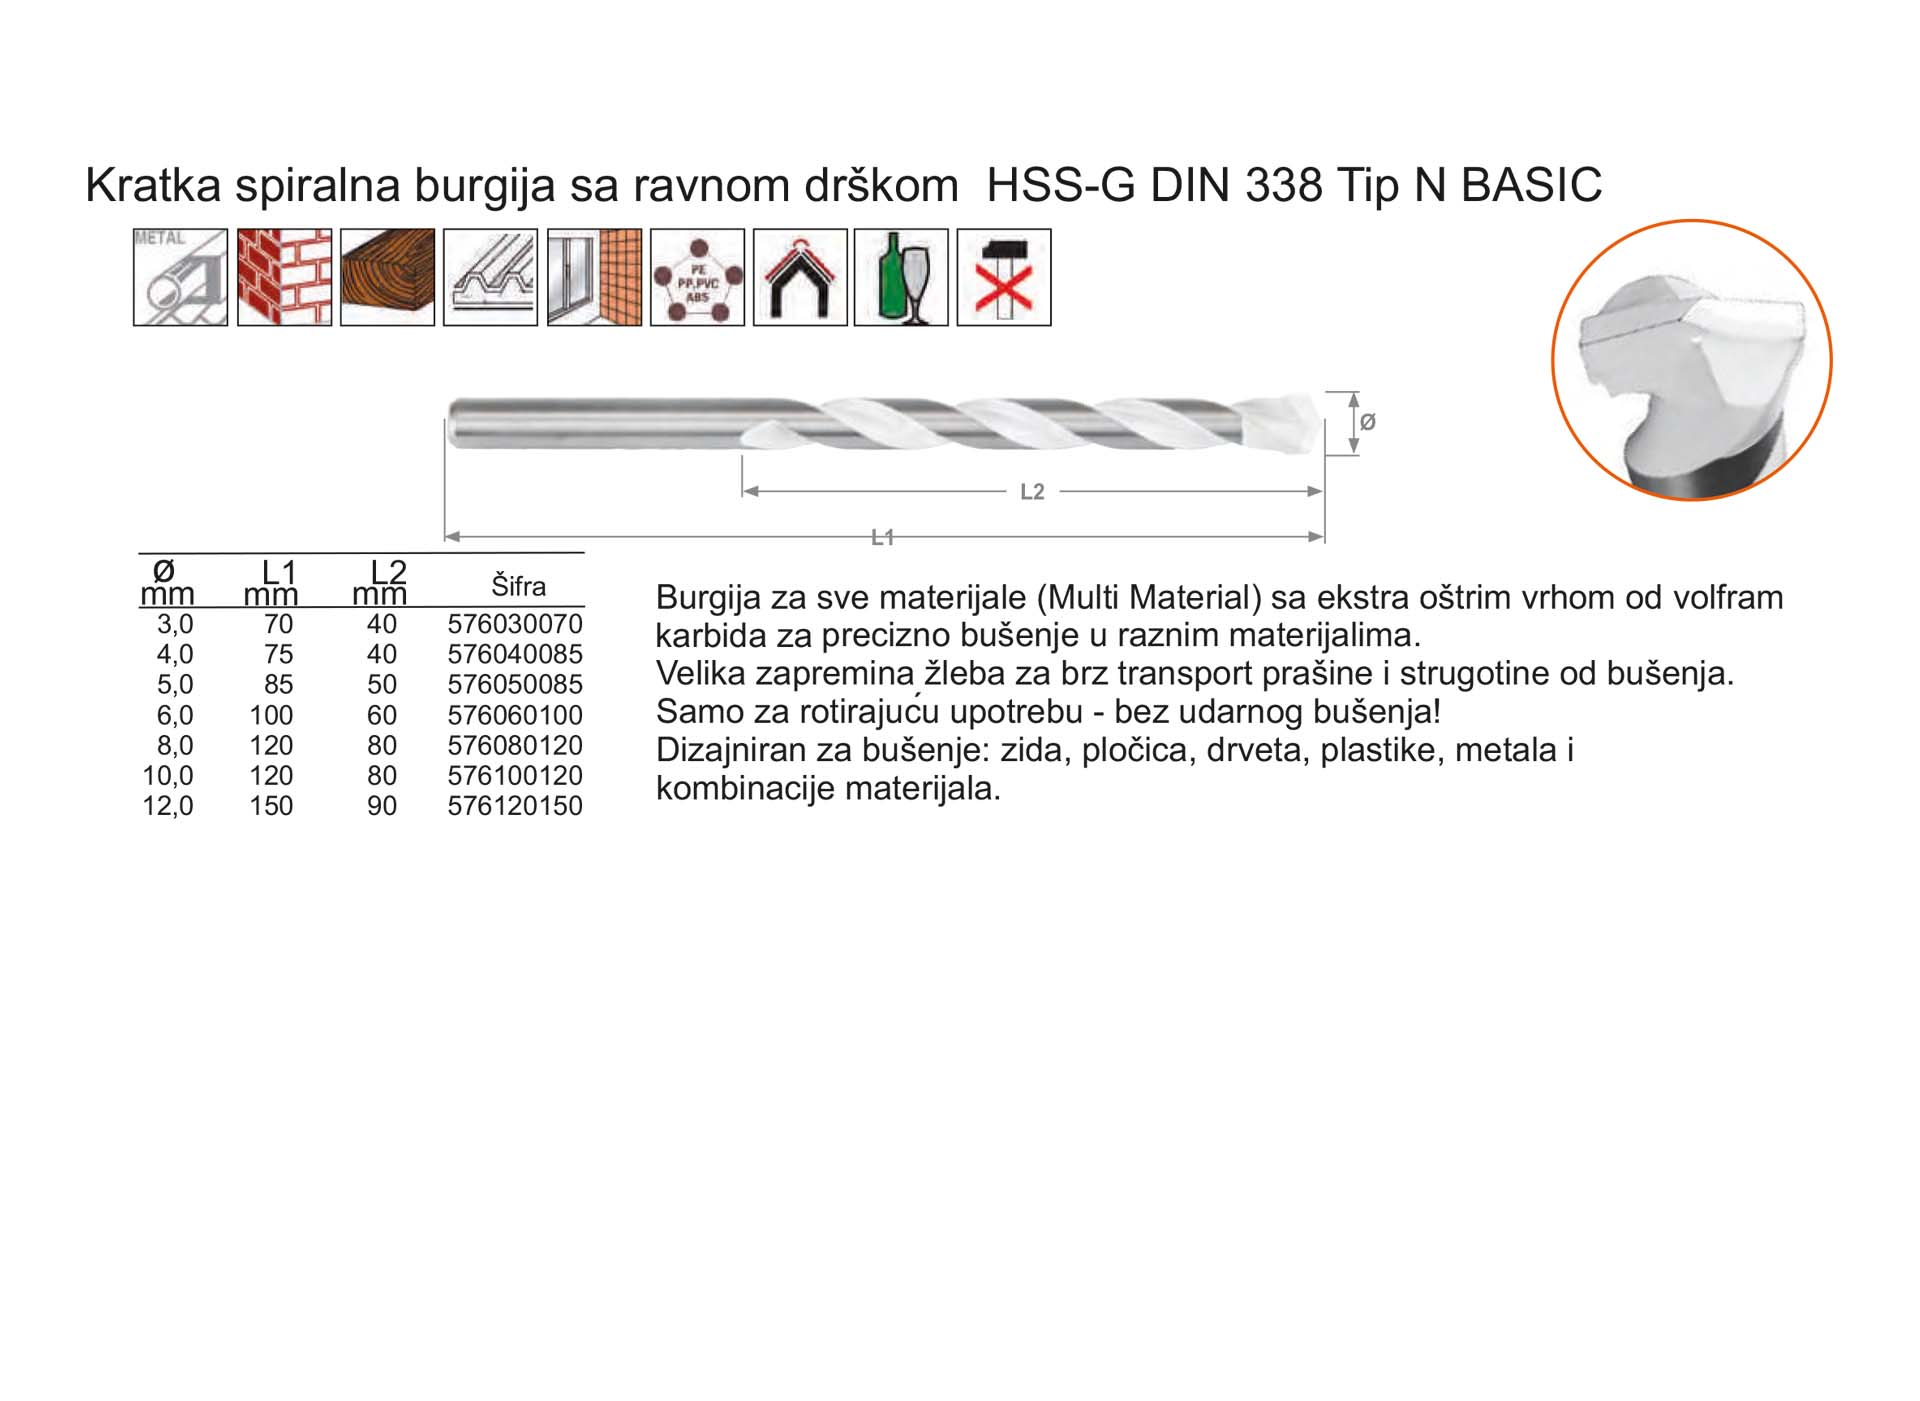 Kratka spiralna burgija sa ravnom drškom HSS-G DIN 338 Tip N BASIC